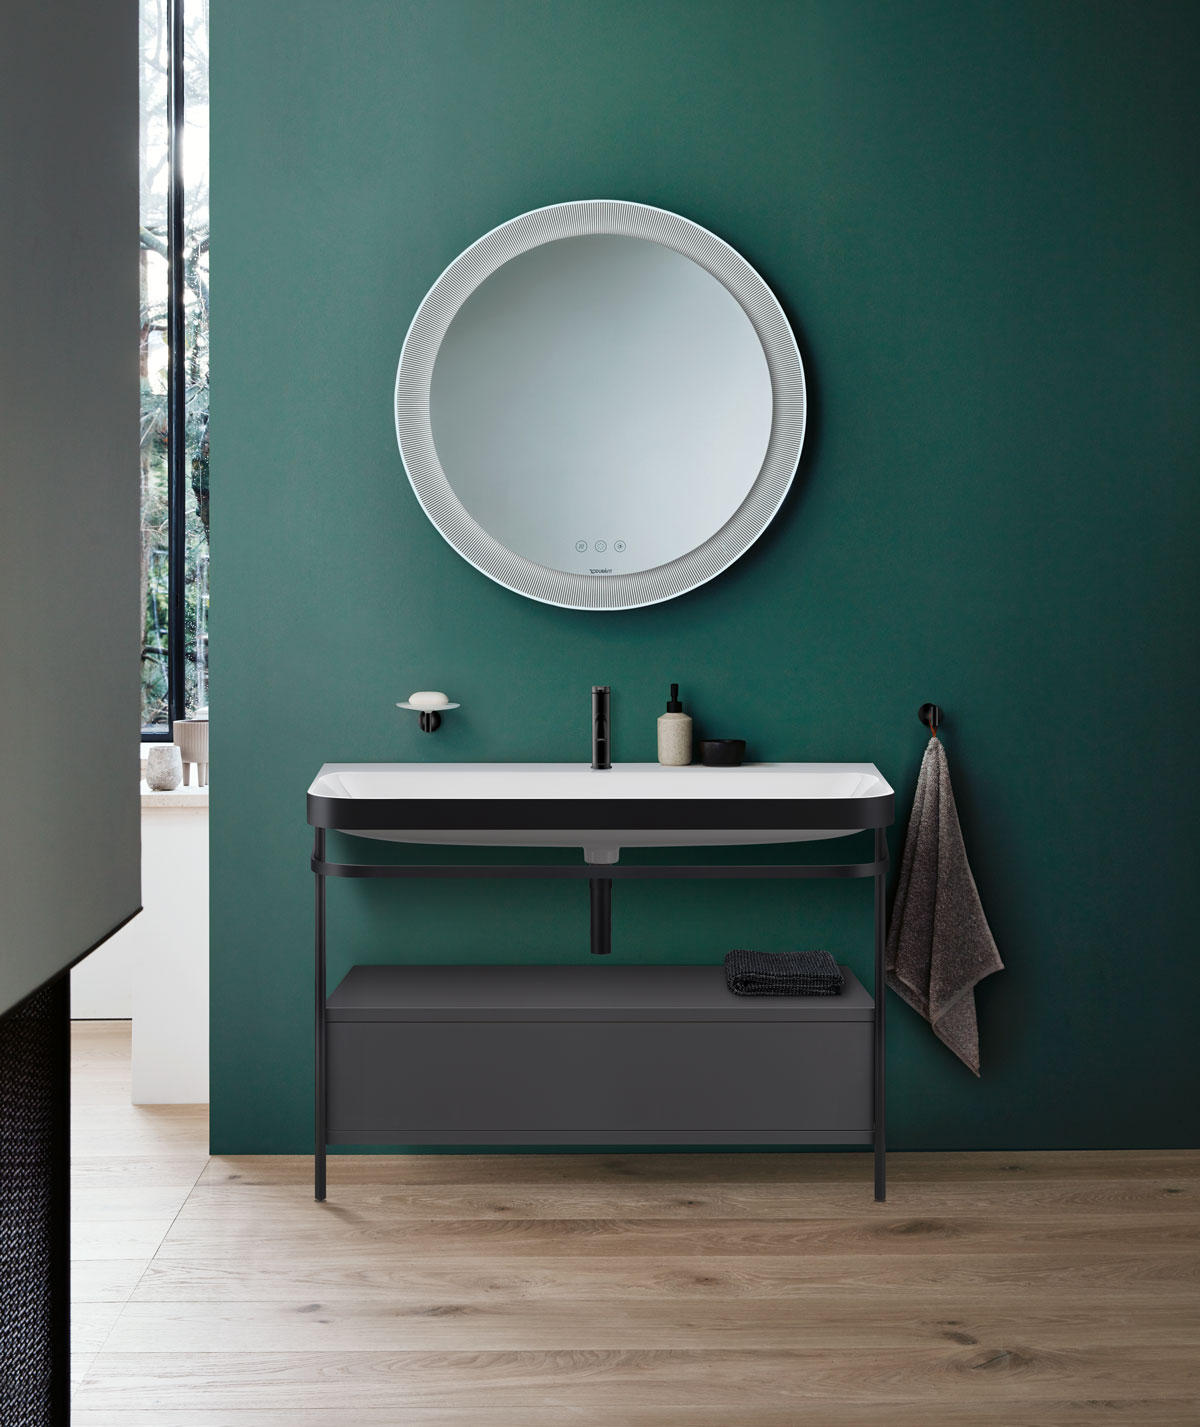 Furniture washbasin c-shaped under Happy D.2 Plus mirror
